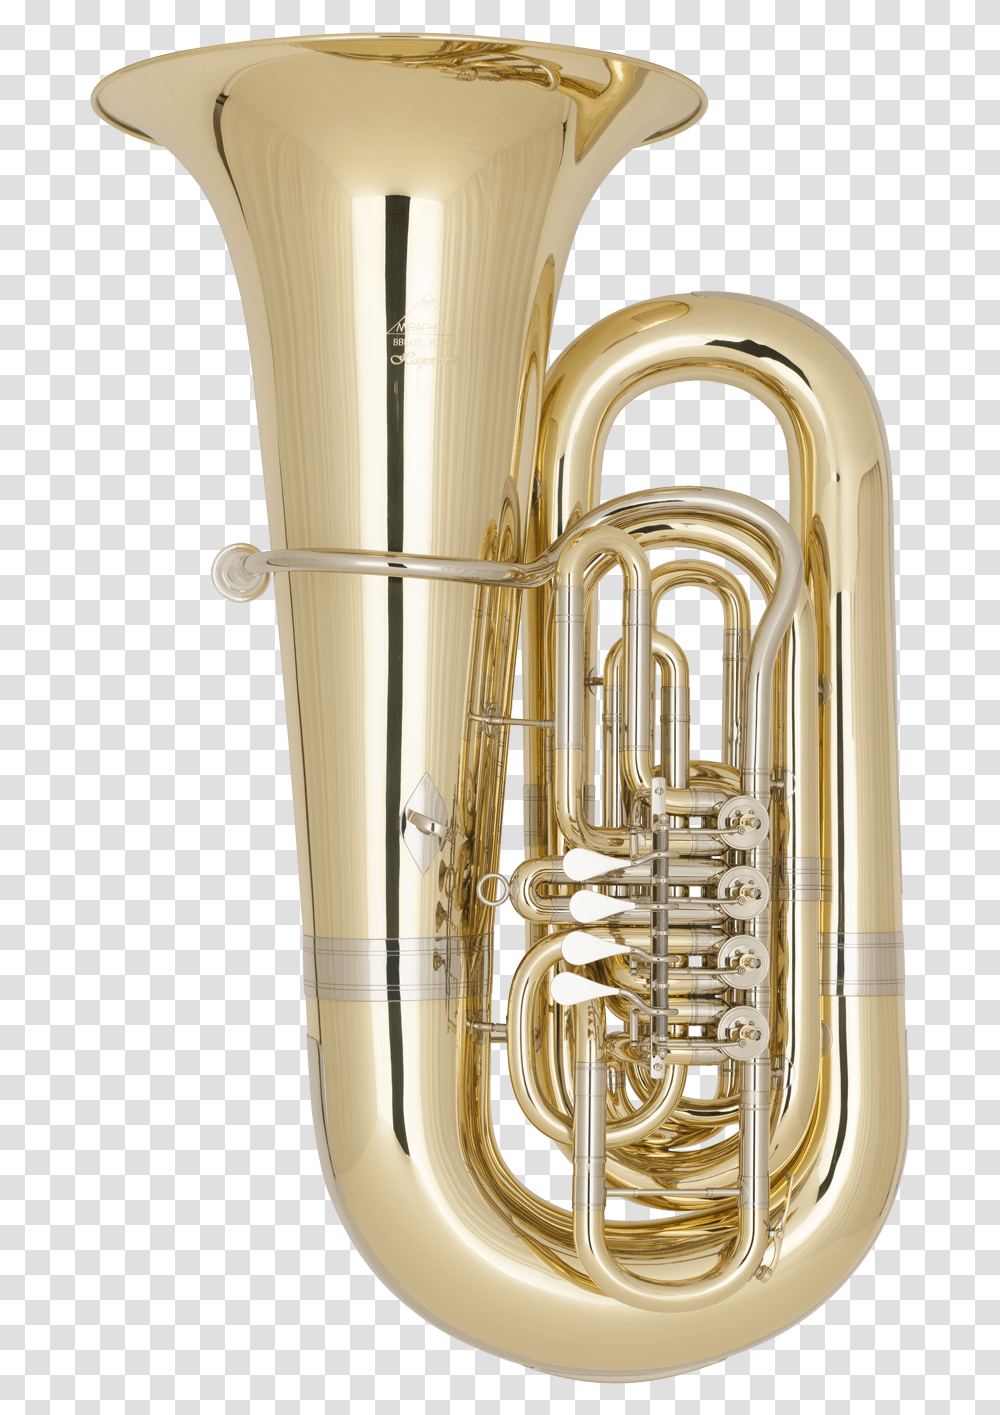 Tuba Em Si Bemol Miraphone Hagen 497 B Tuba, Horn, Brass Section, Musical Instrument, Euphonium Transparent Png